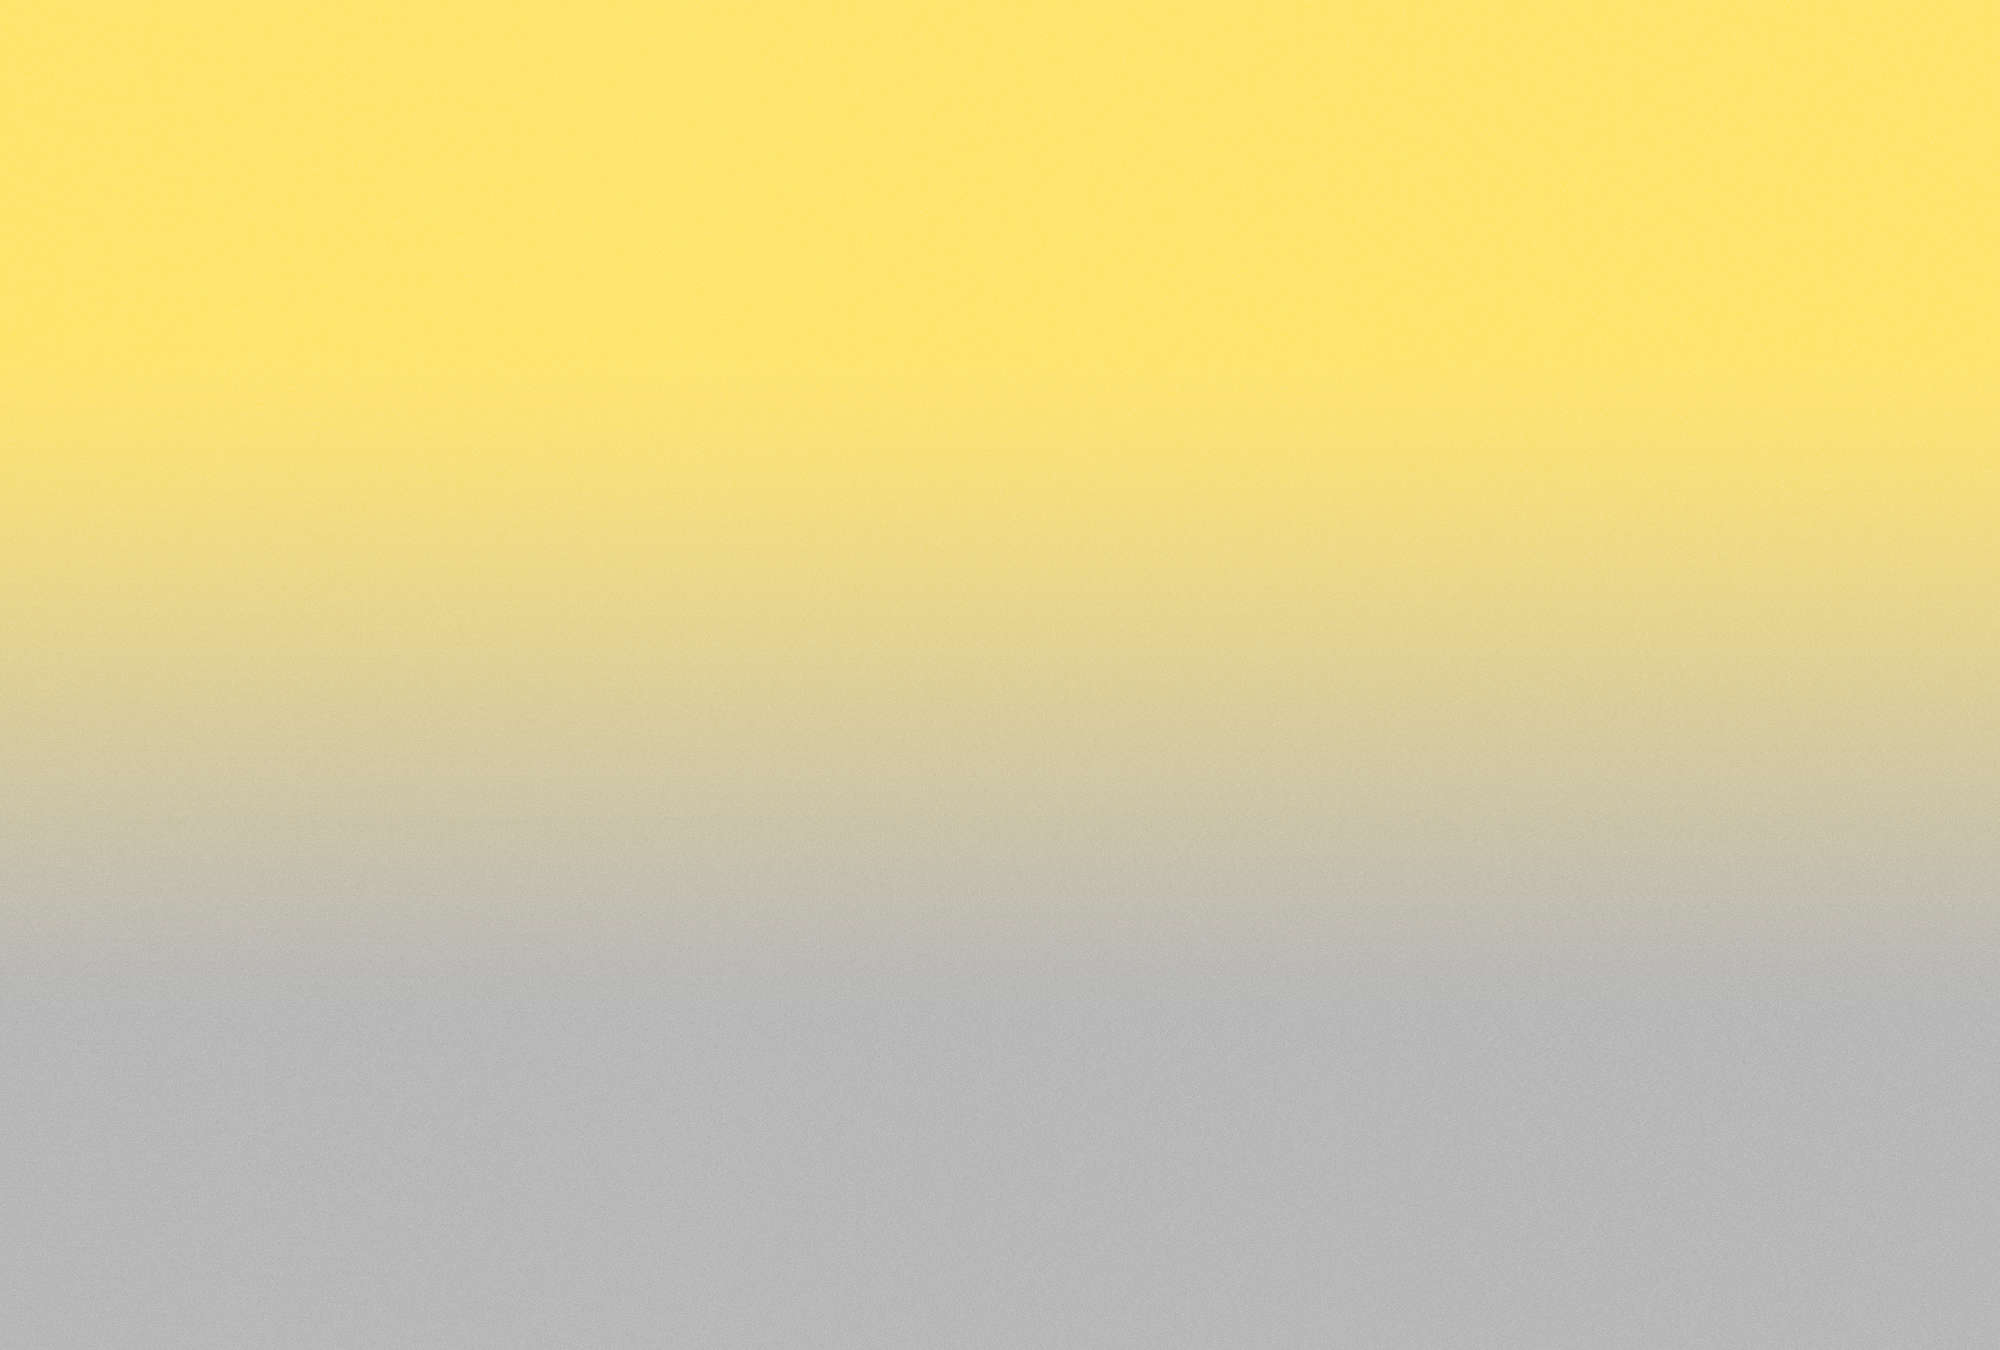             Colour Studio 1 - photo wallpaper yellow & grey trend colours ombre effect
        